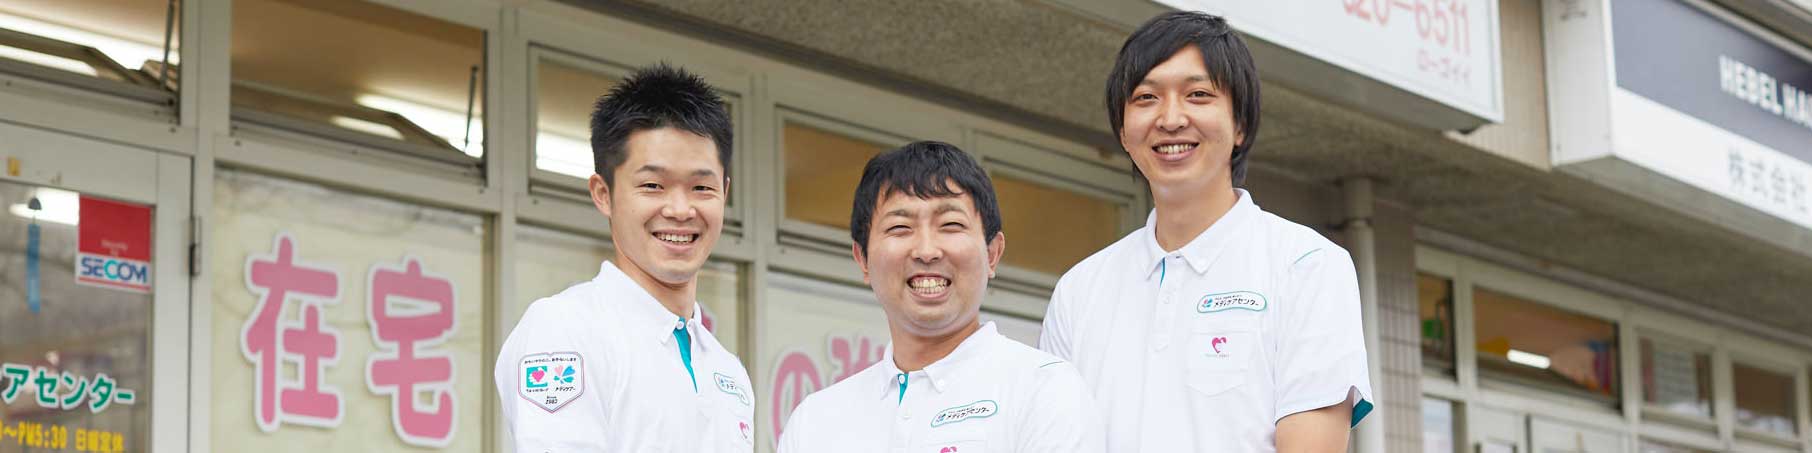 yokosuka-staff